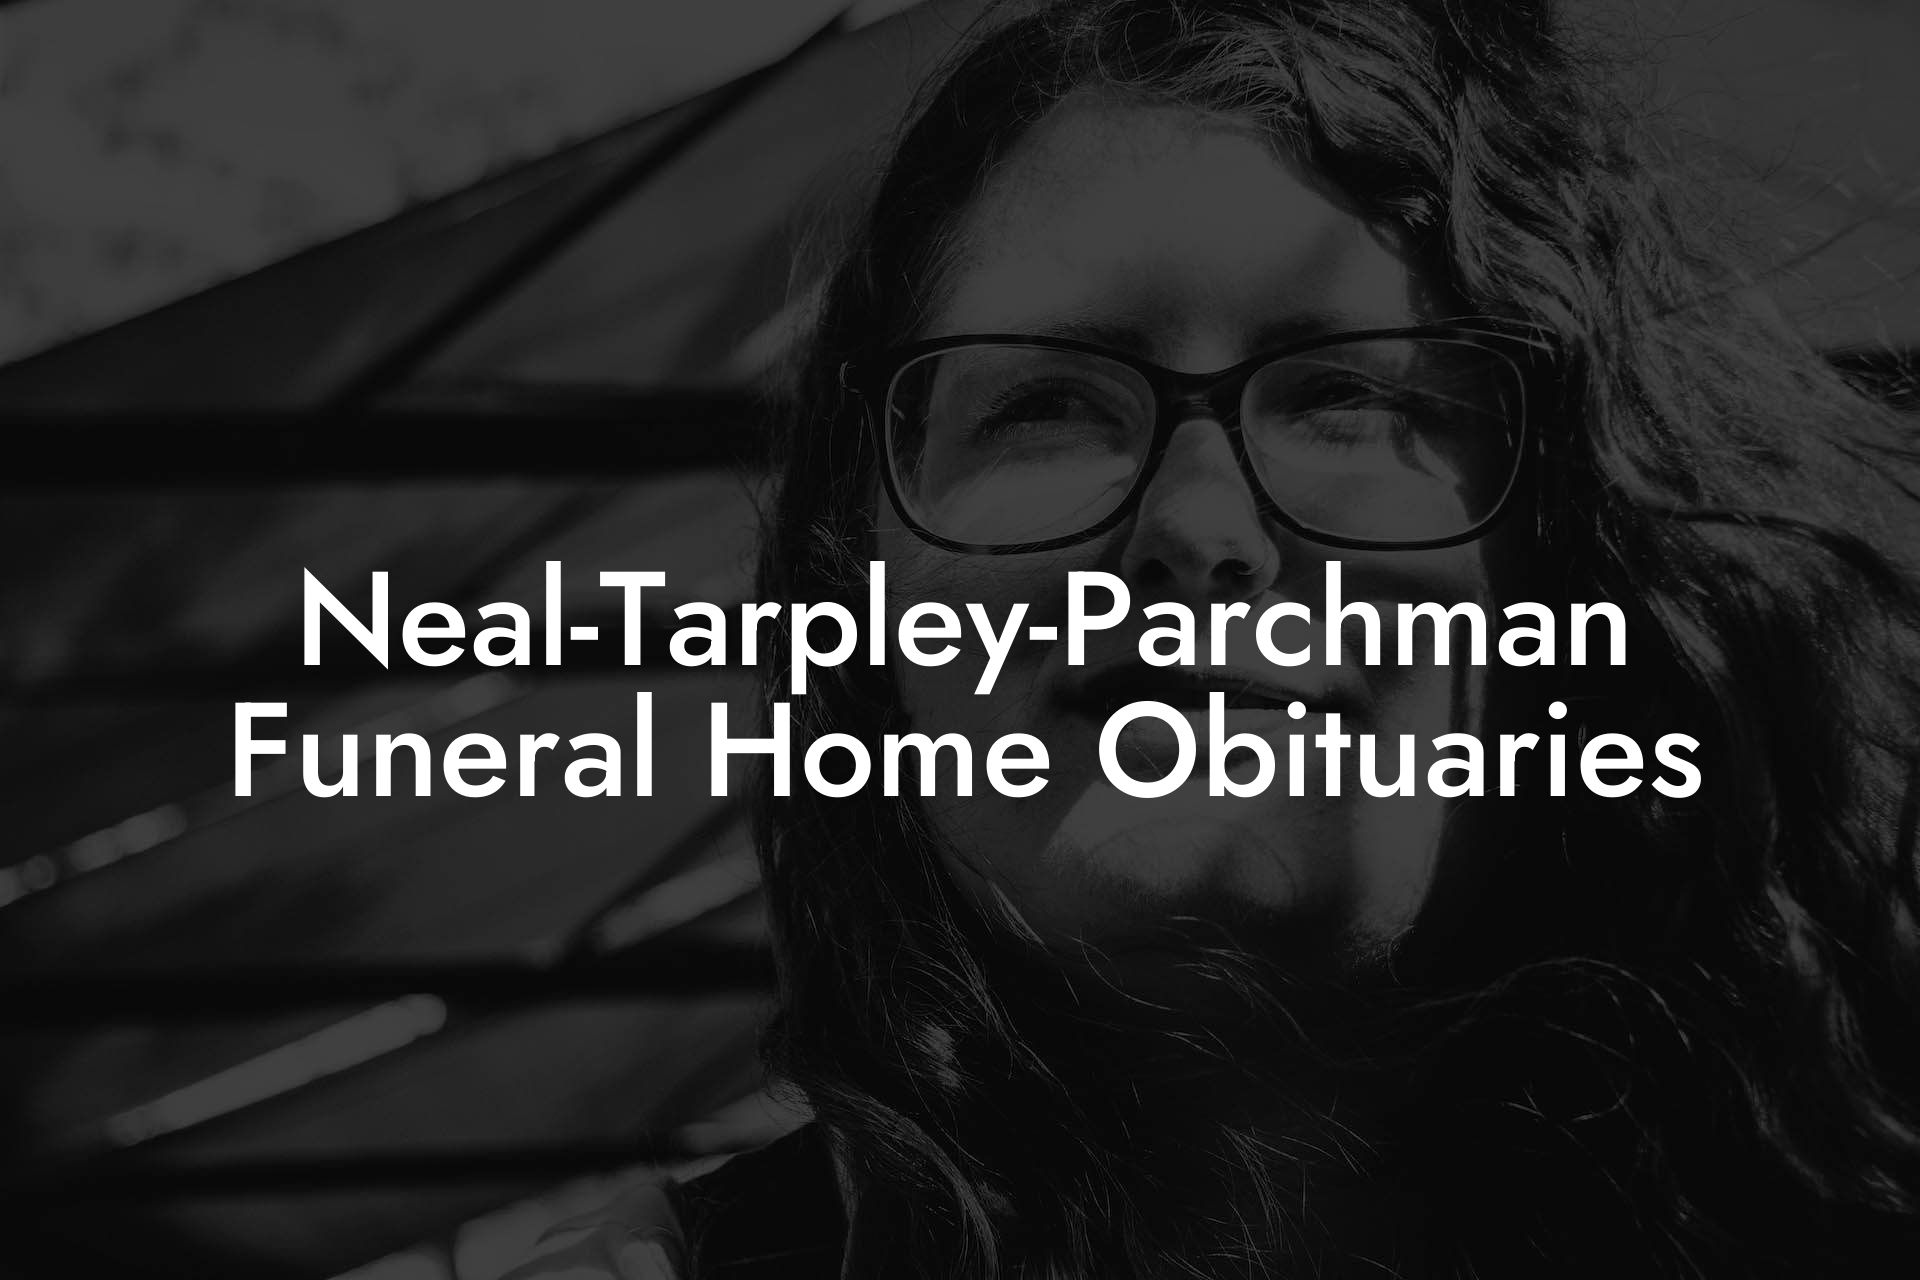 Neal-Tarpley-Parchman Funeral Home Obituaries